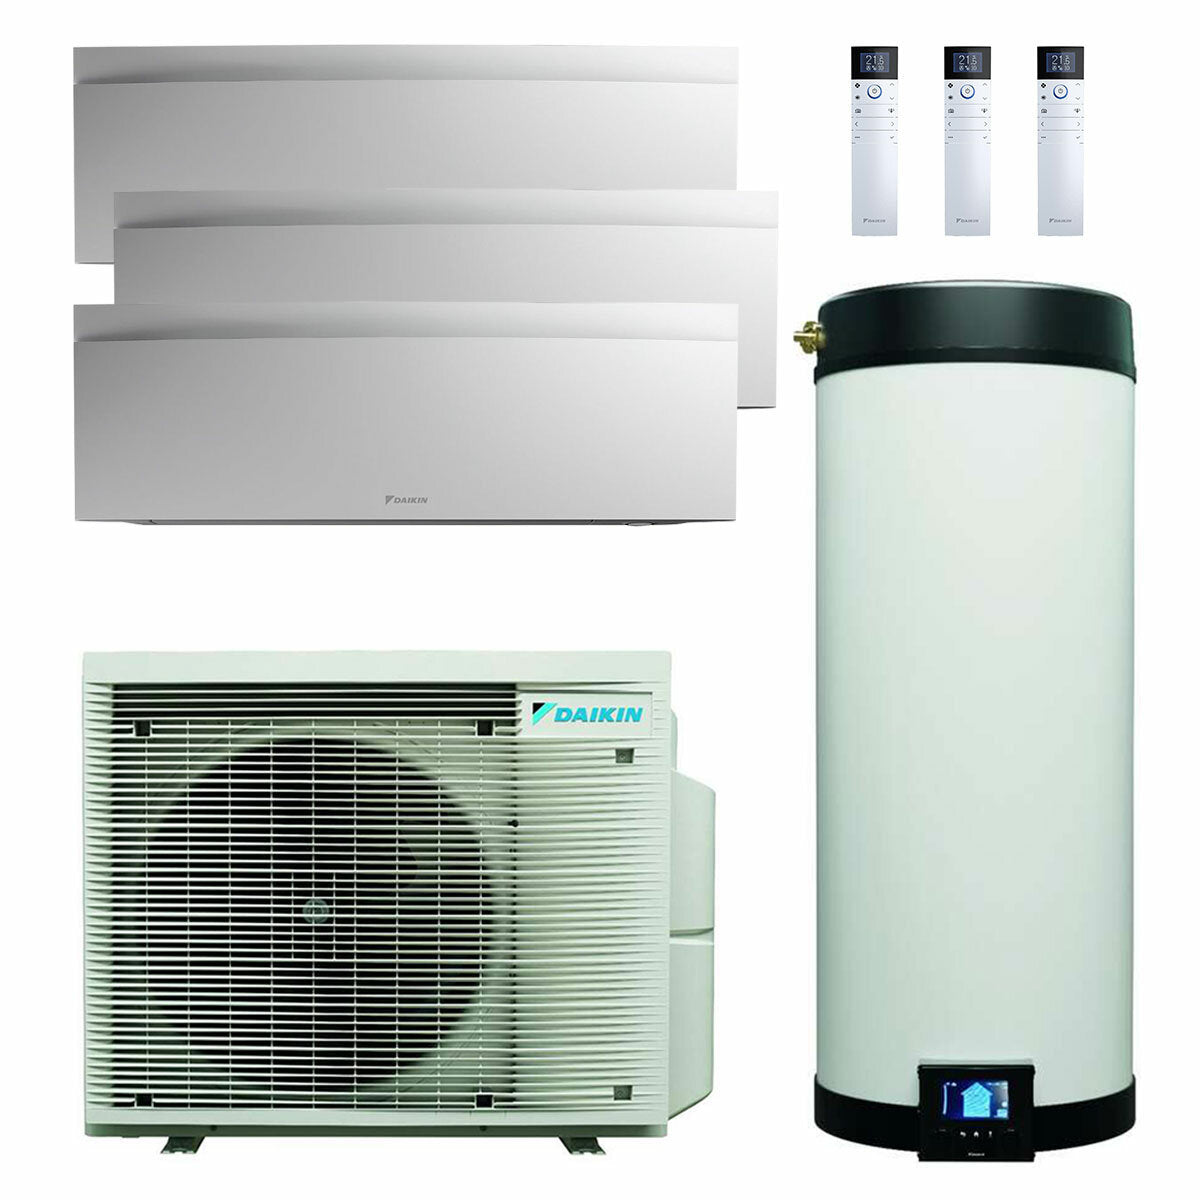 Daikin Multi+ trial split air conditioning and domestic hot water system - Emura 3 white internal units 9000+9000+12000 BTU - 90 l tank